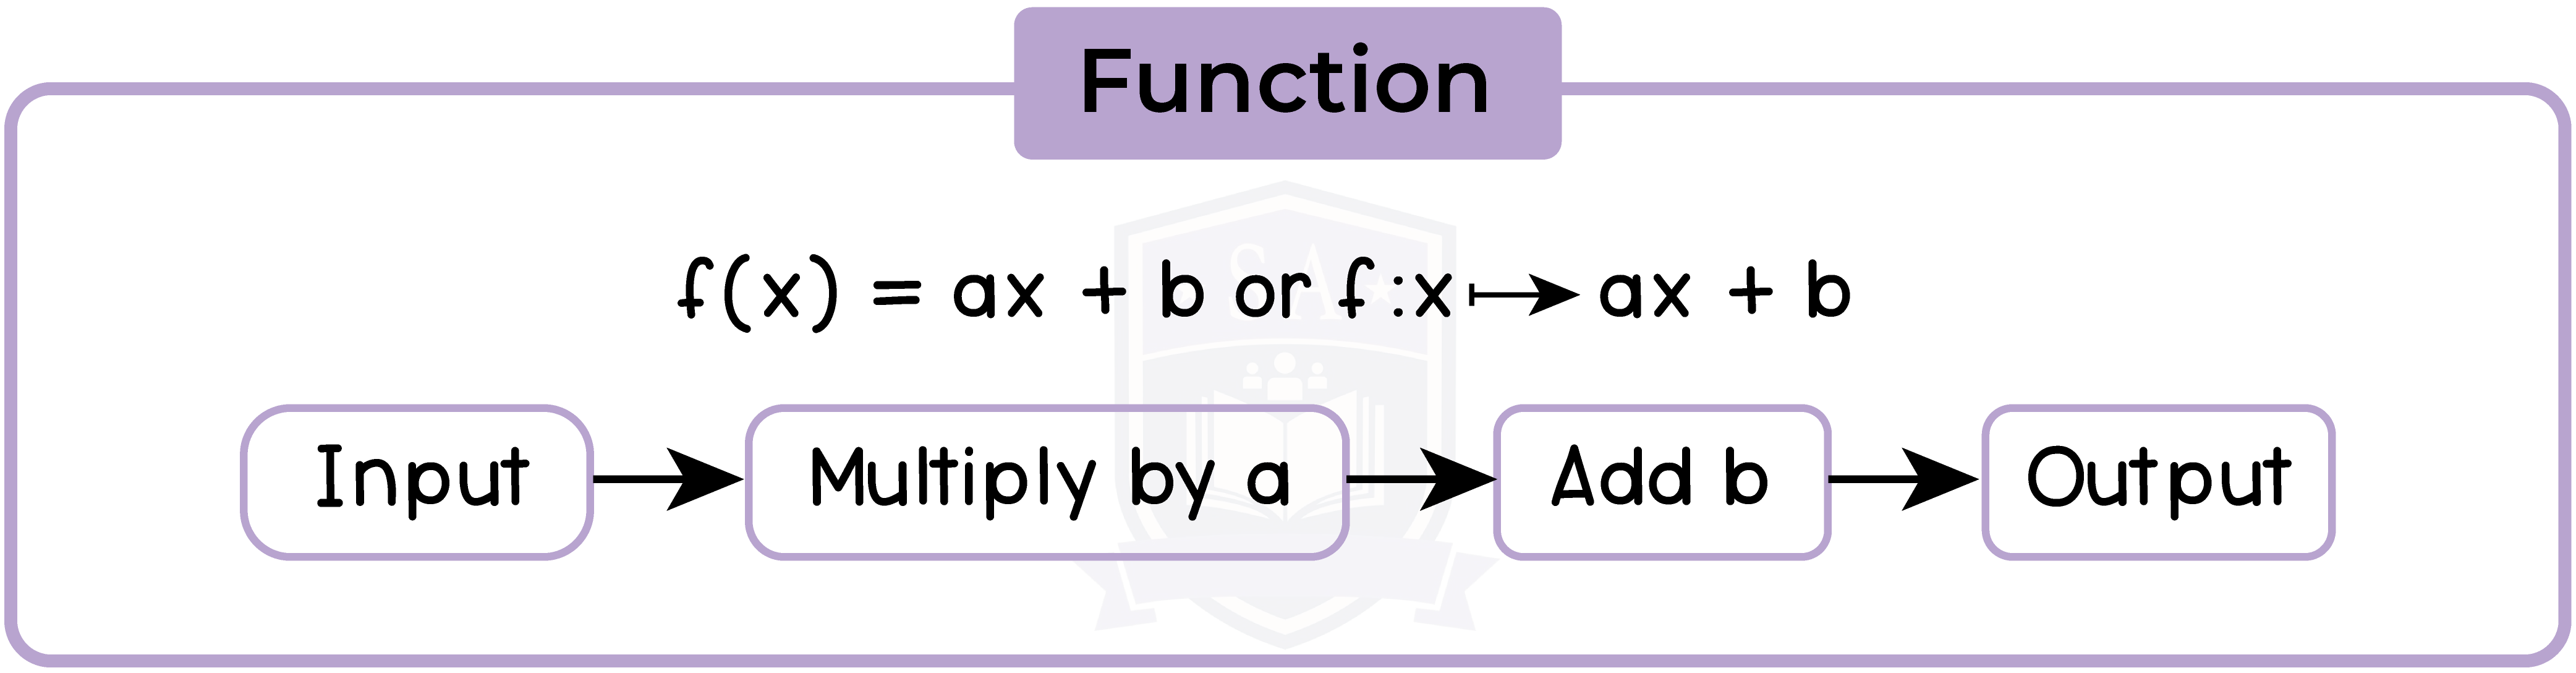 edexcel_igcse_mathematics a_topic 21_functional notation_001_Function